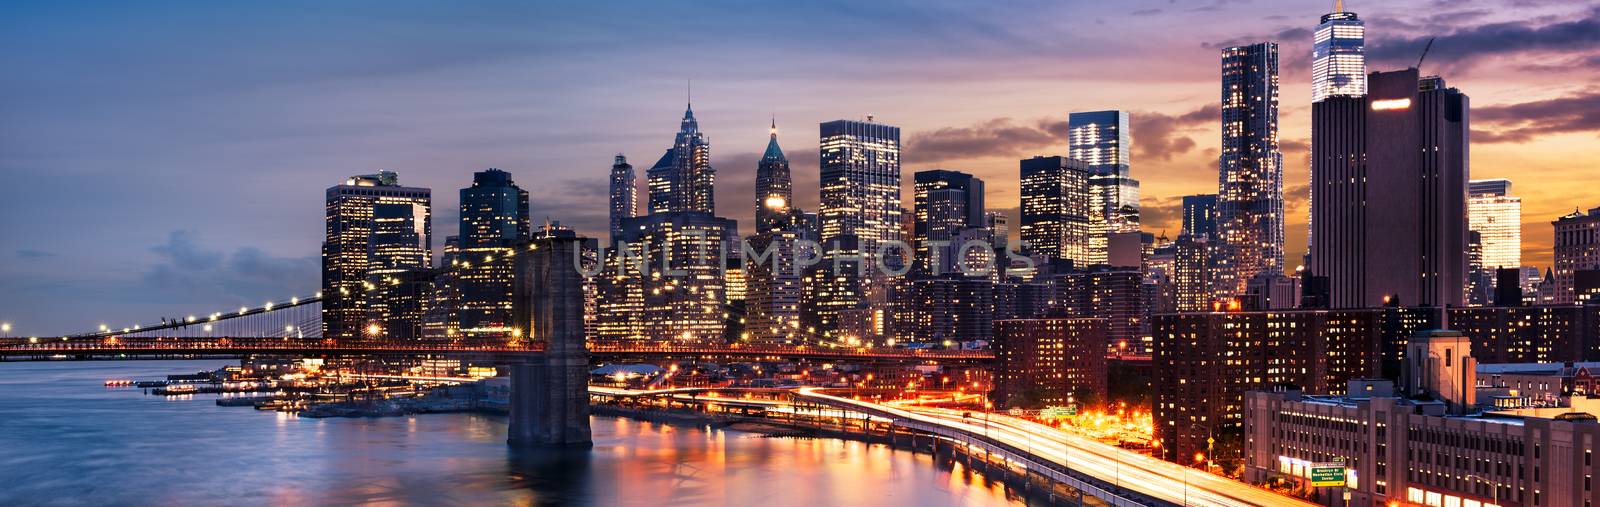 New York  City lights by ventdusud